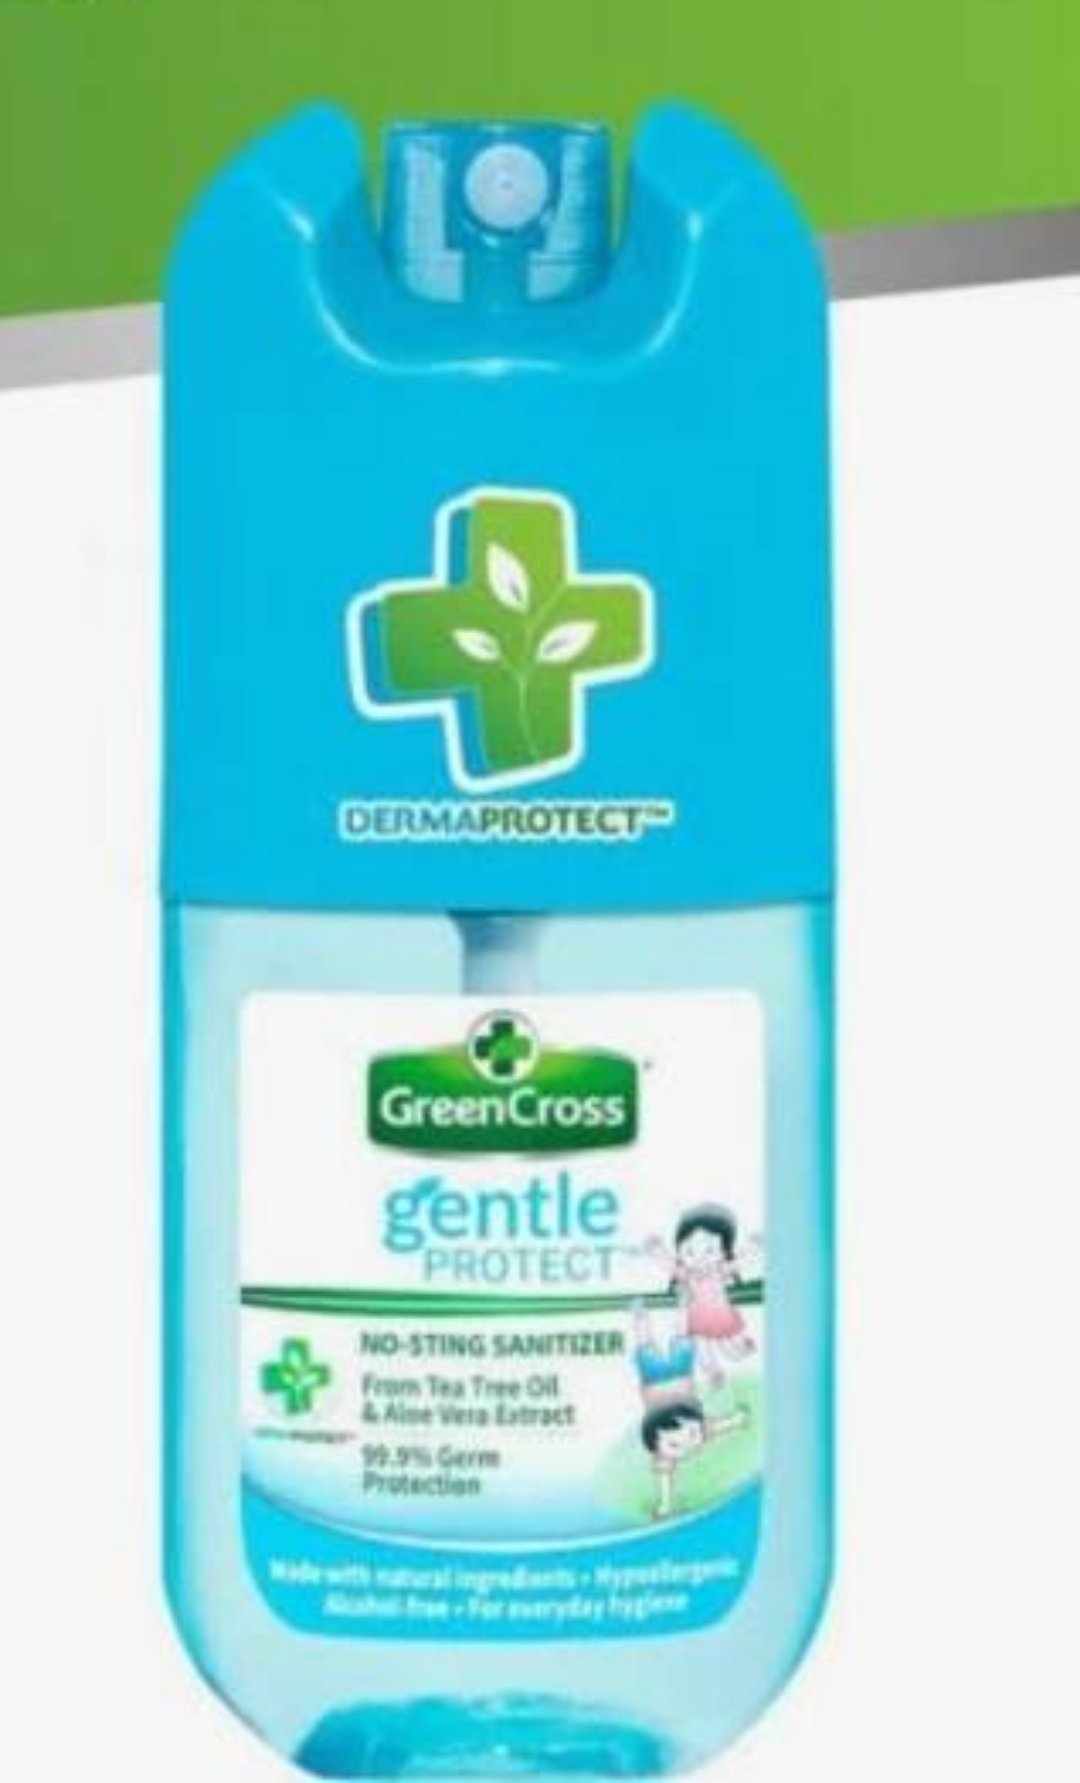 Green Cross No-Sting Sanitizer 40ml